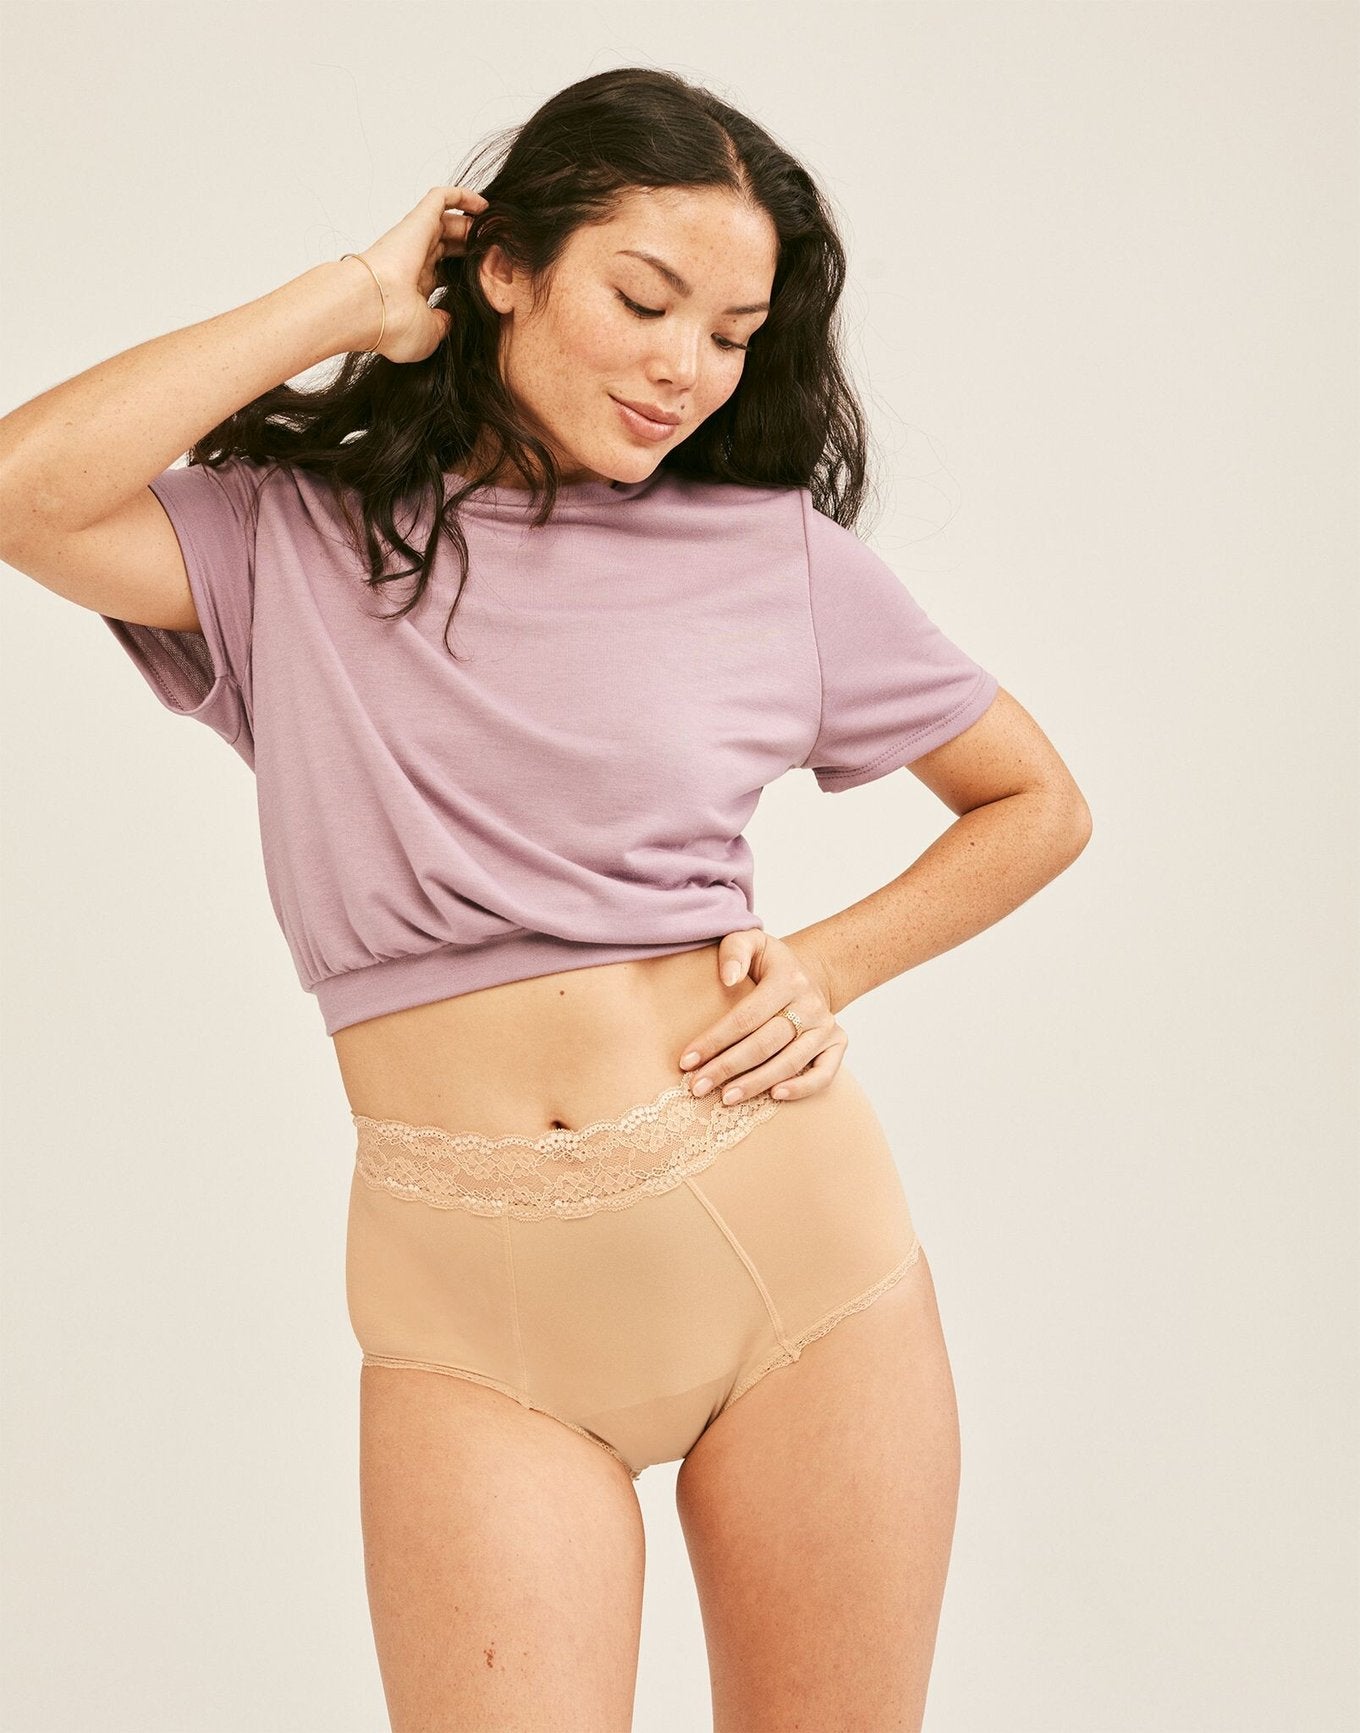 Amelia period-proof panty